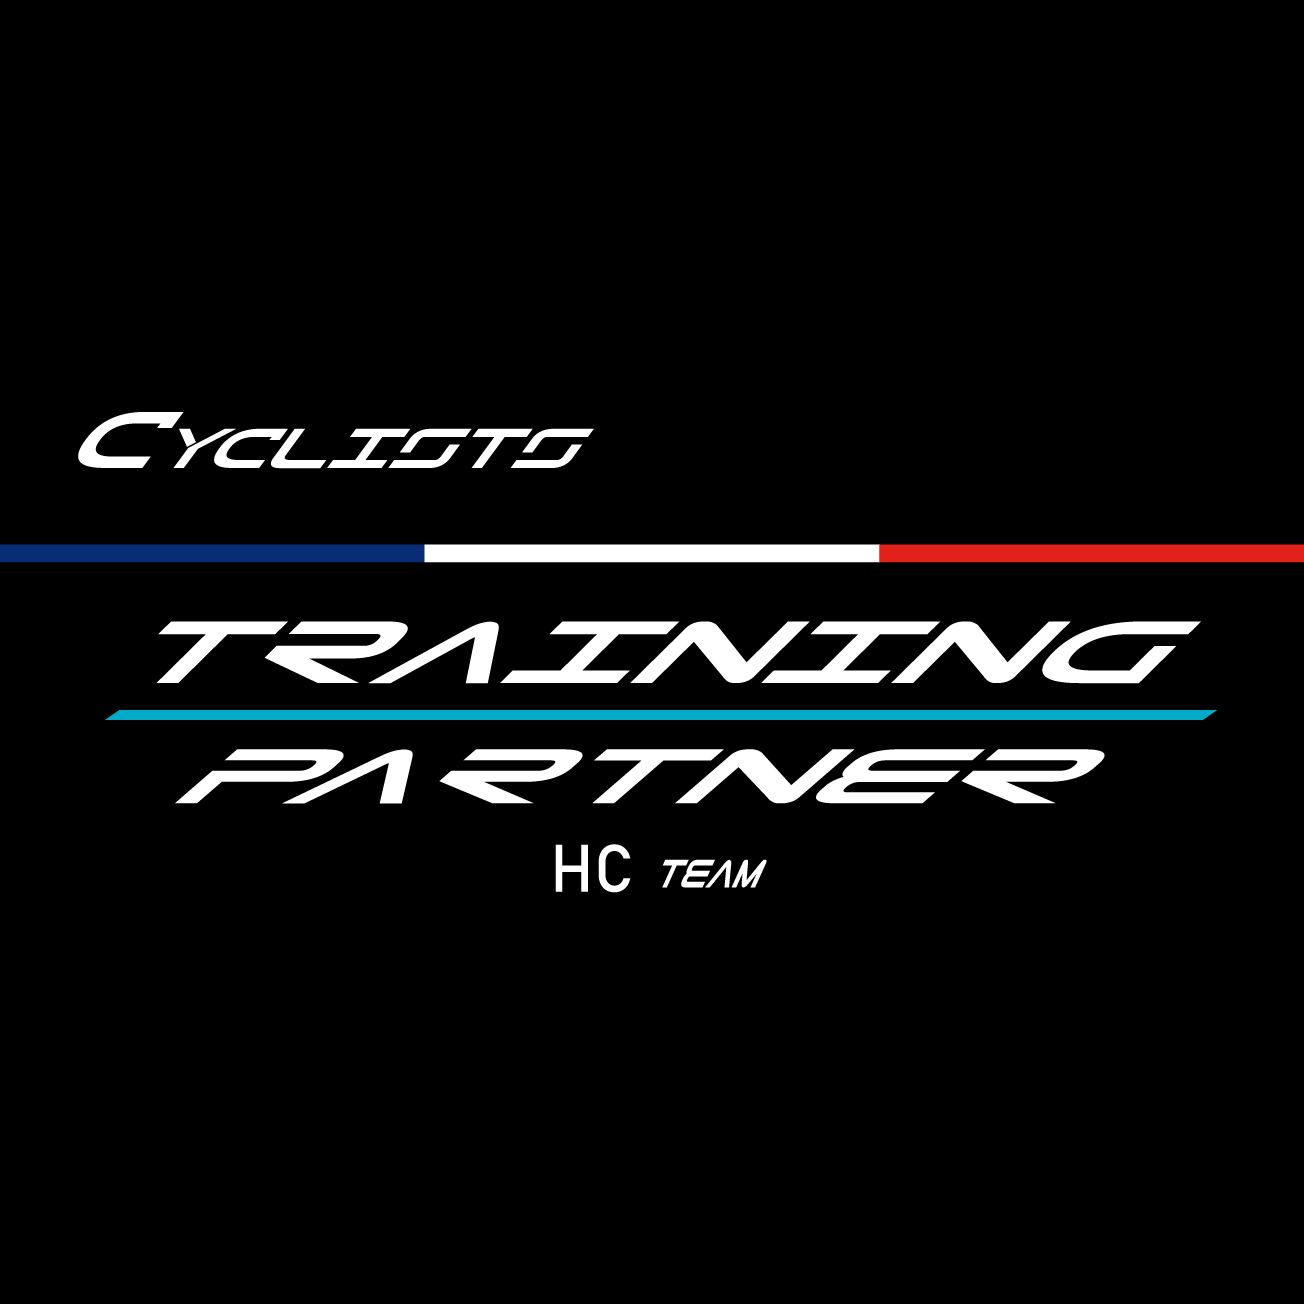 Club Image for CYCLISTS TRAINING PARTNER HILL CLIMB TEAM